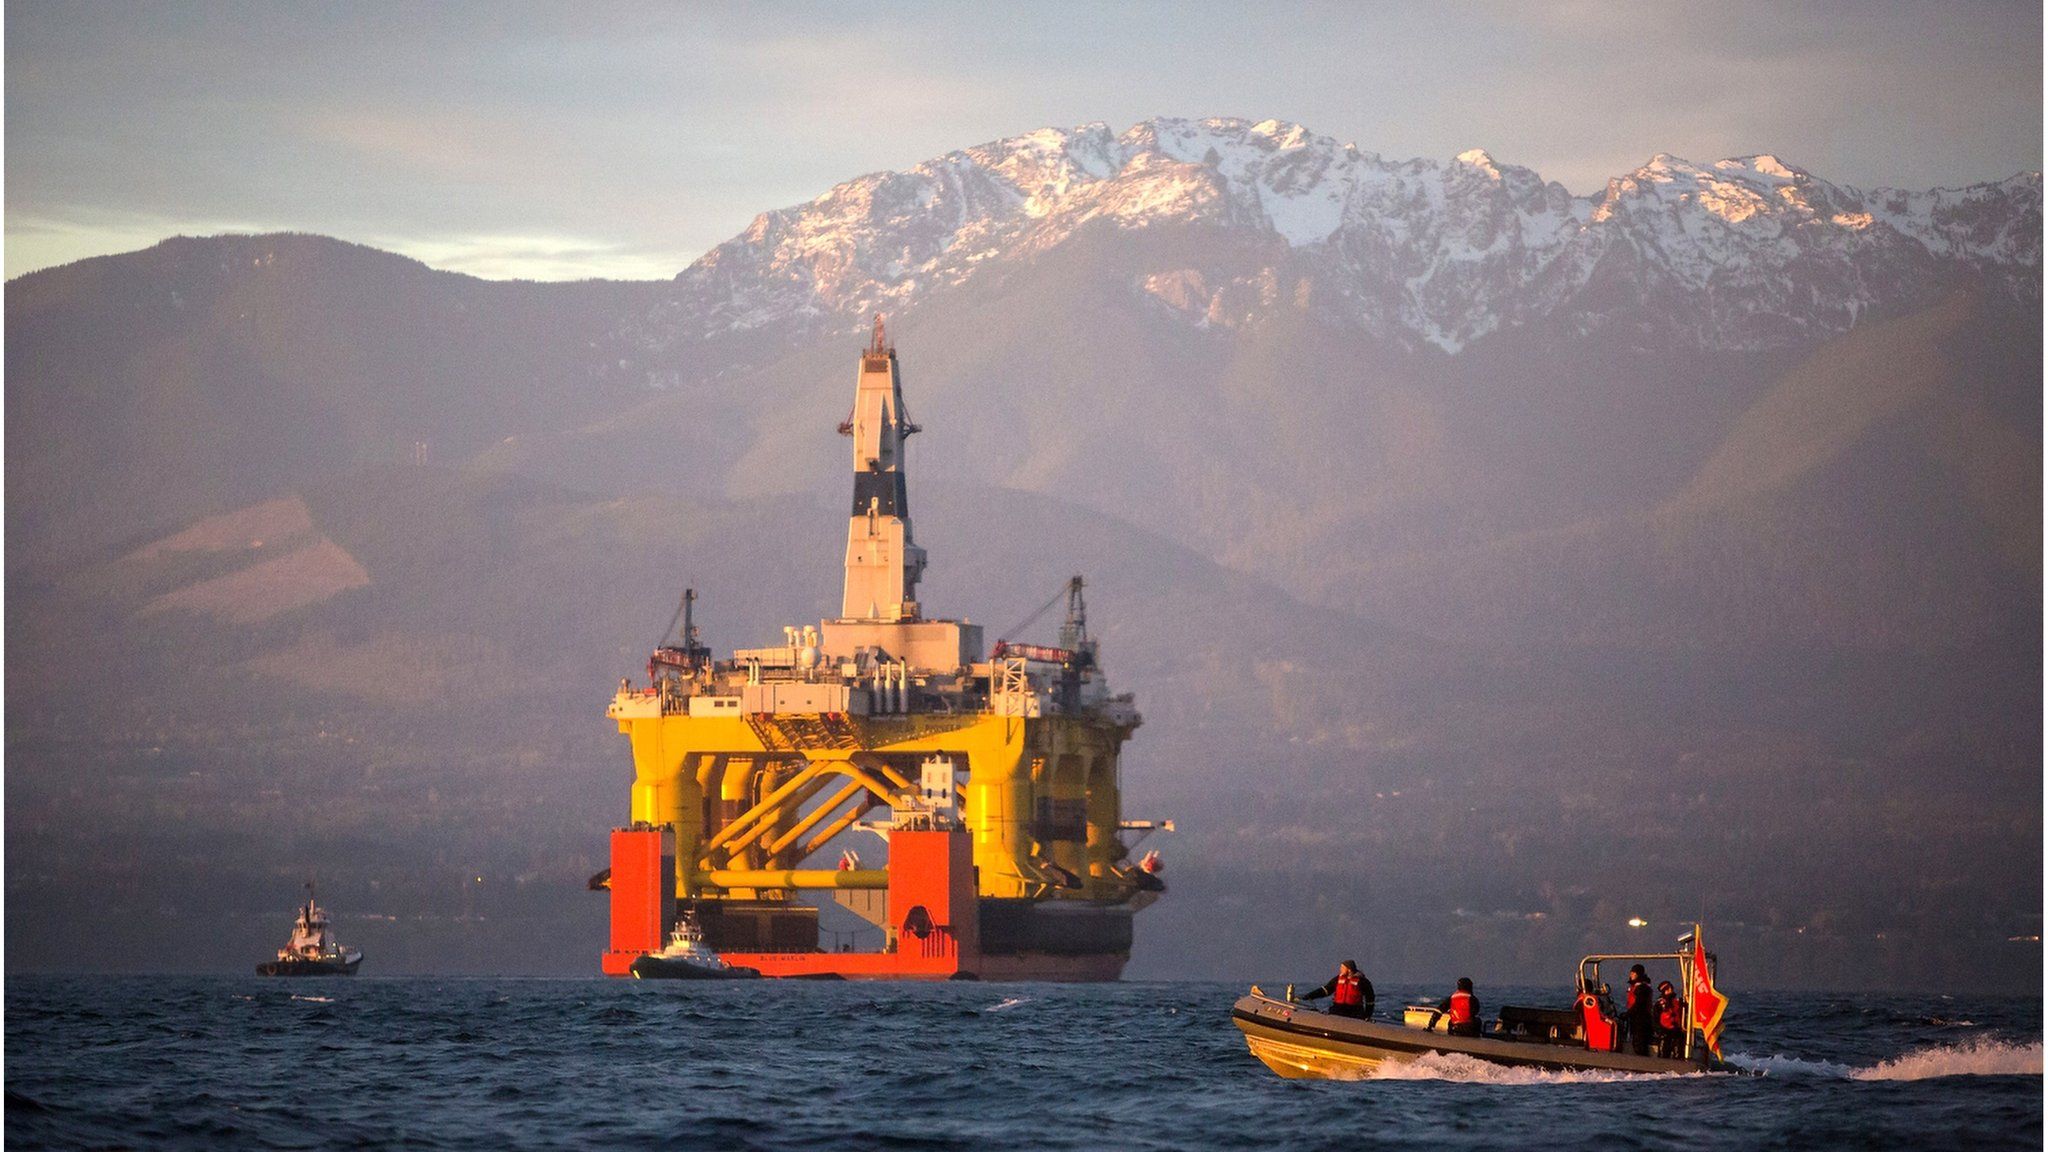 Transocean Polar Pioneer, a semi-submersible drilling unit that Royal Dutch Shell leases